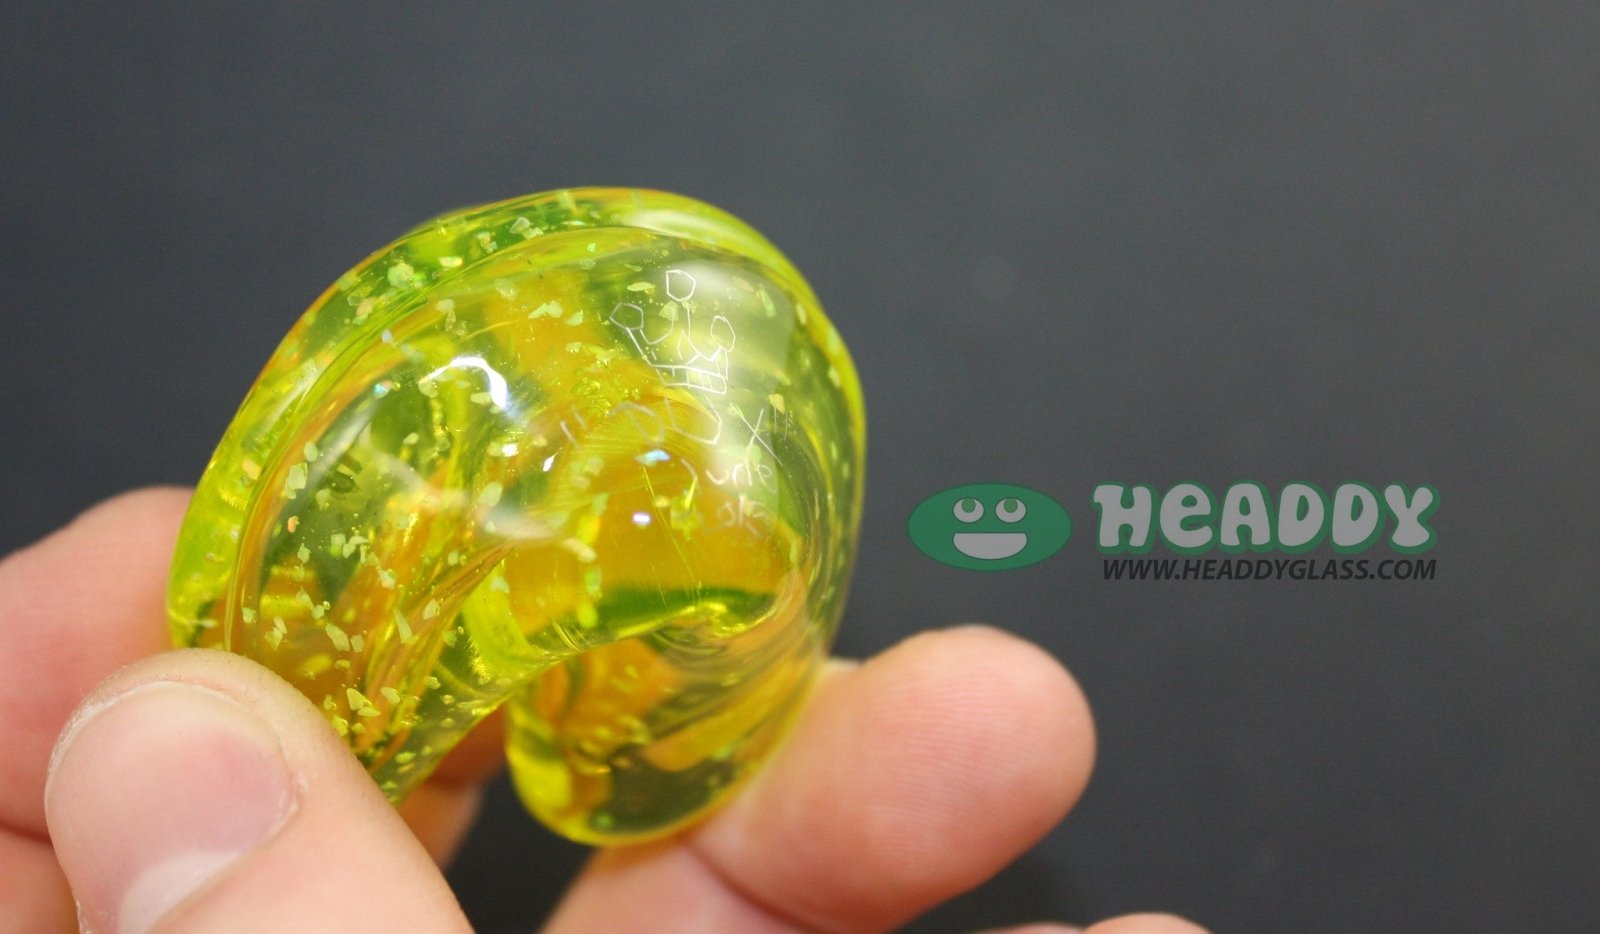 Dux Glass half life opal tech fortune cookie pendant - Headdy Glass